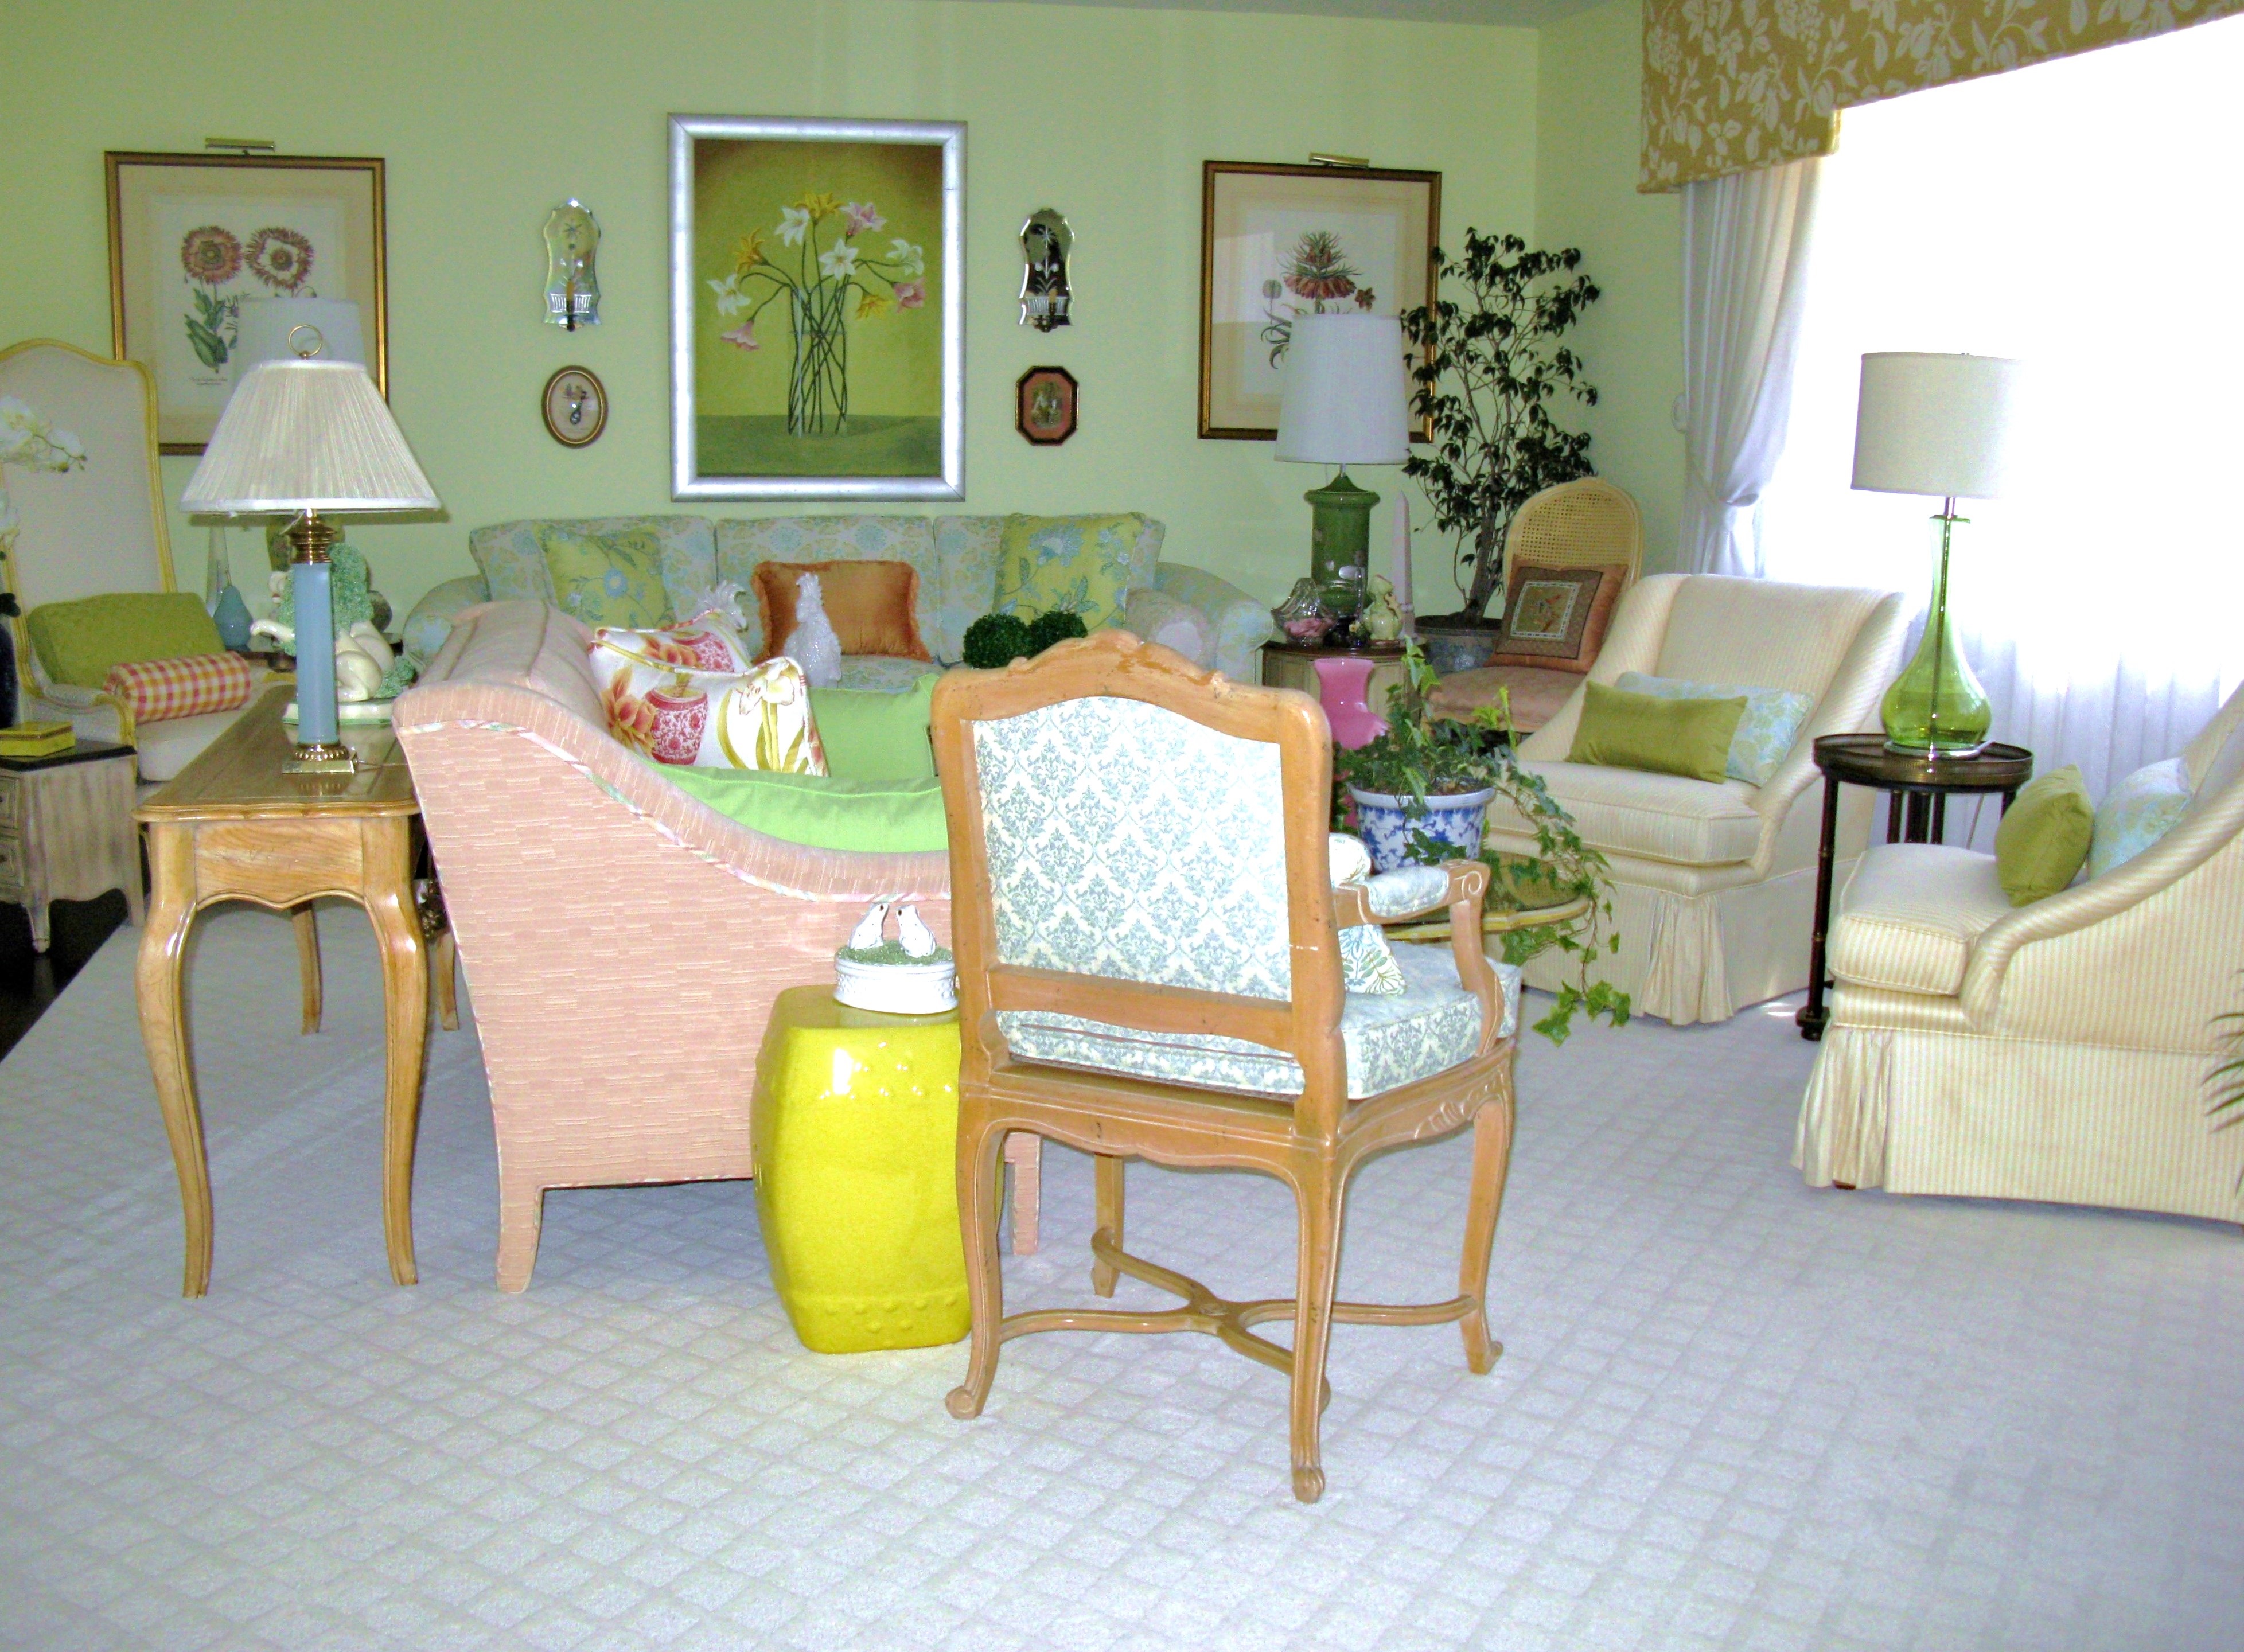 Traditional Living Room Design